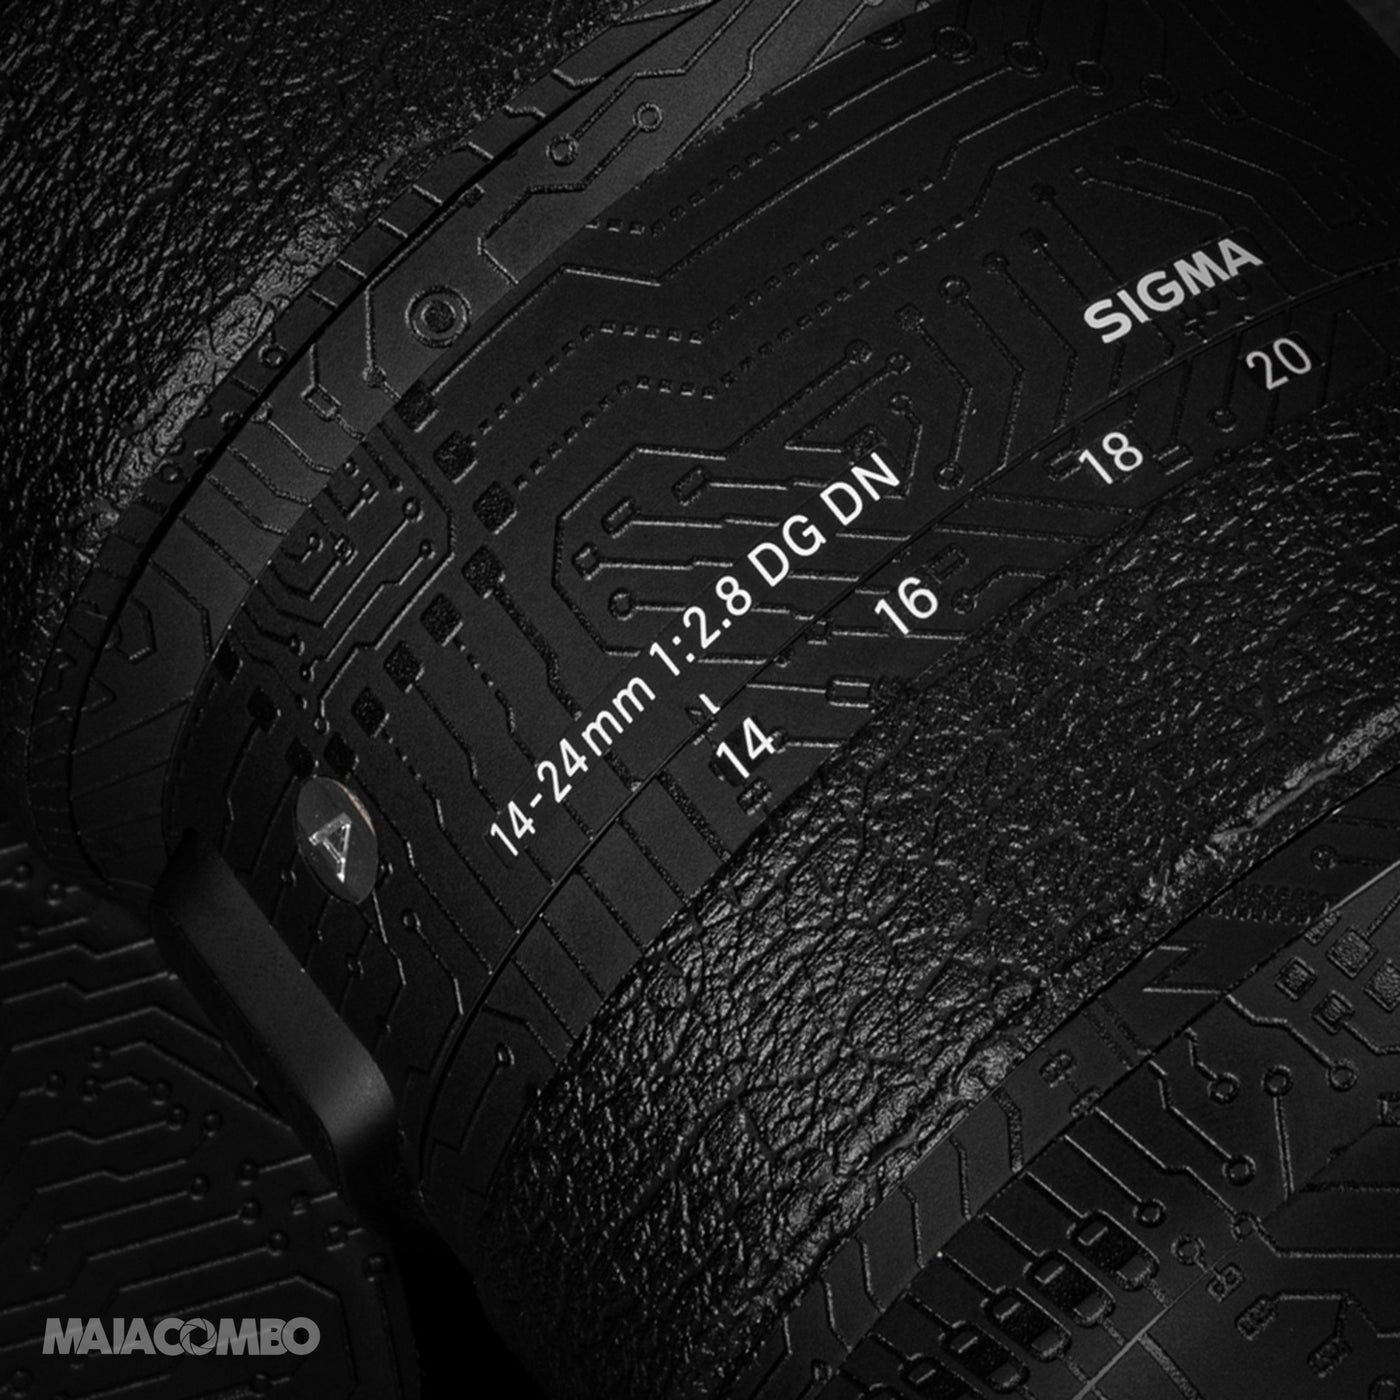 SIGMA 14-24mm/F2.8 DG DN ART Lens Skin